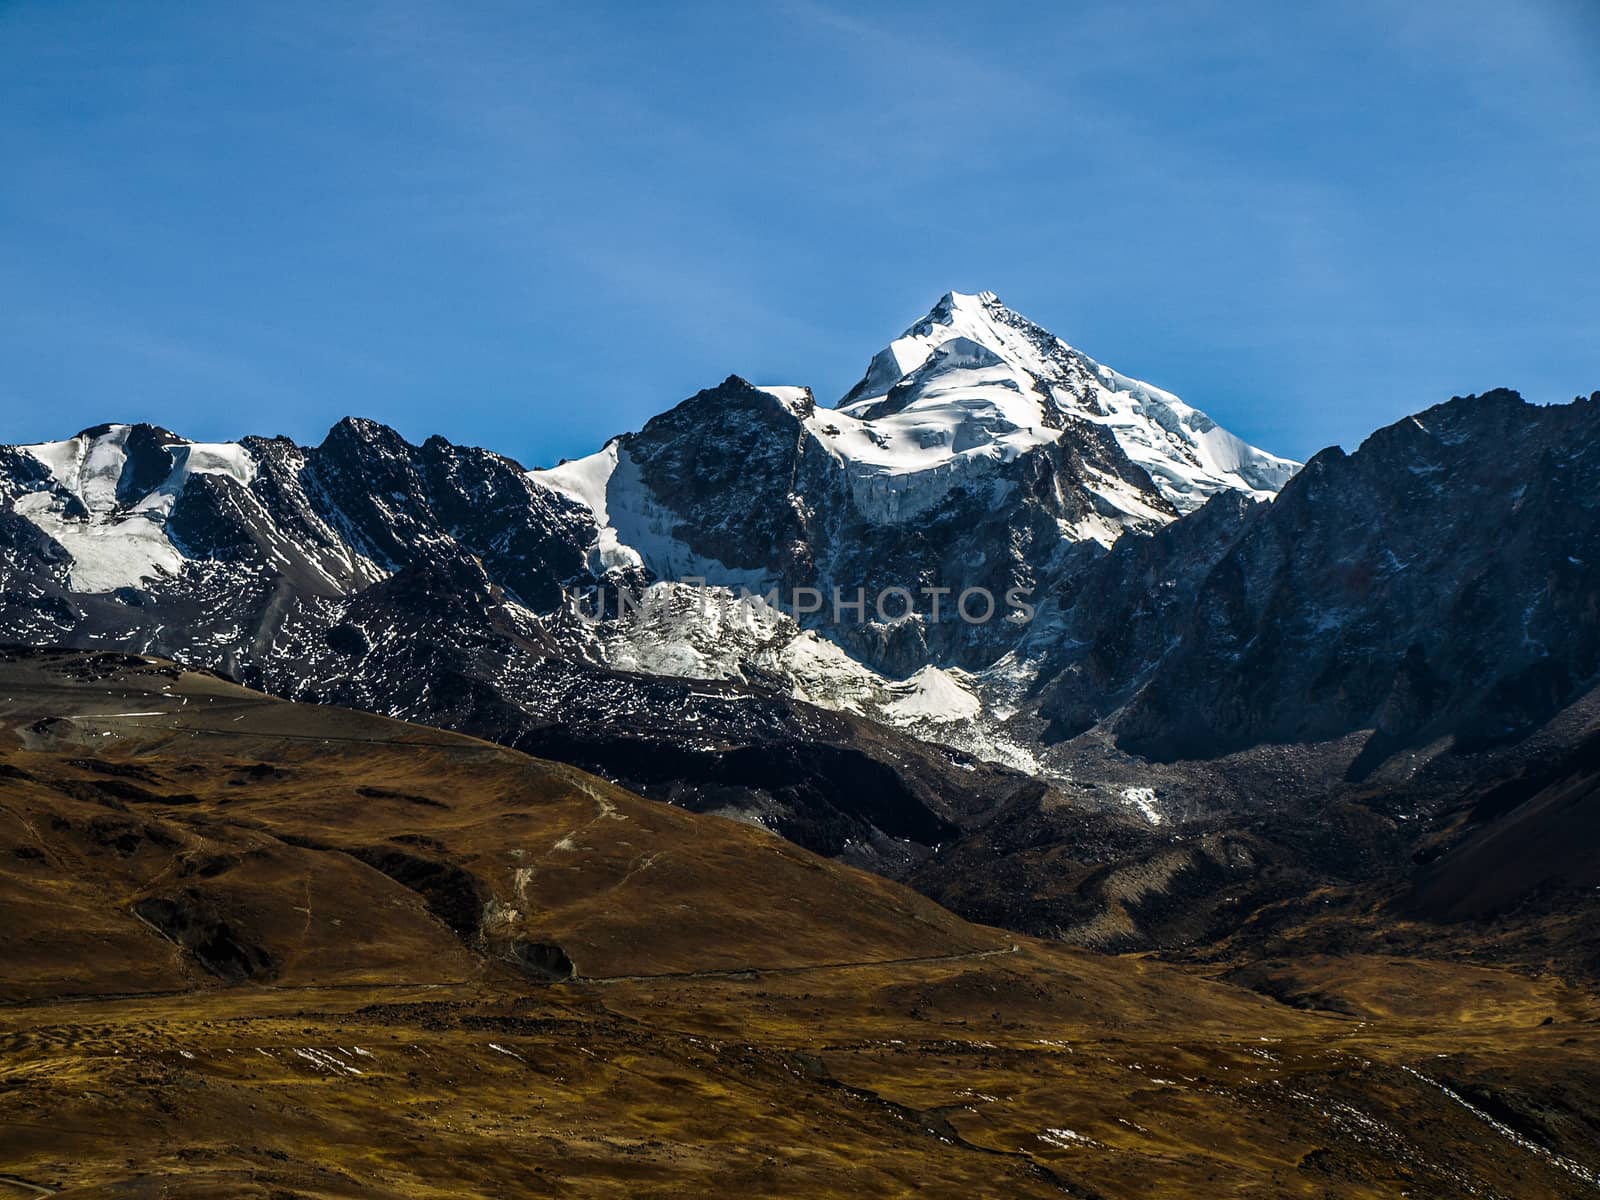 Well known peak (6088 m) near La Paz (Bolivia) Huyana Potosi